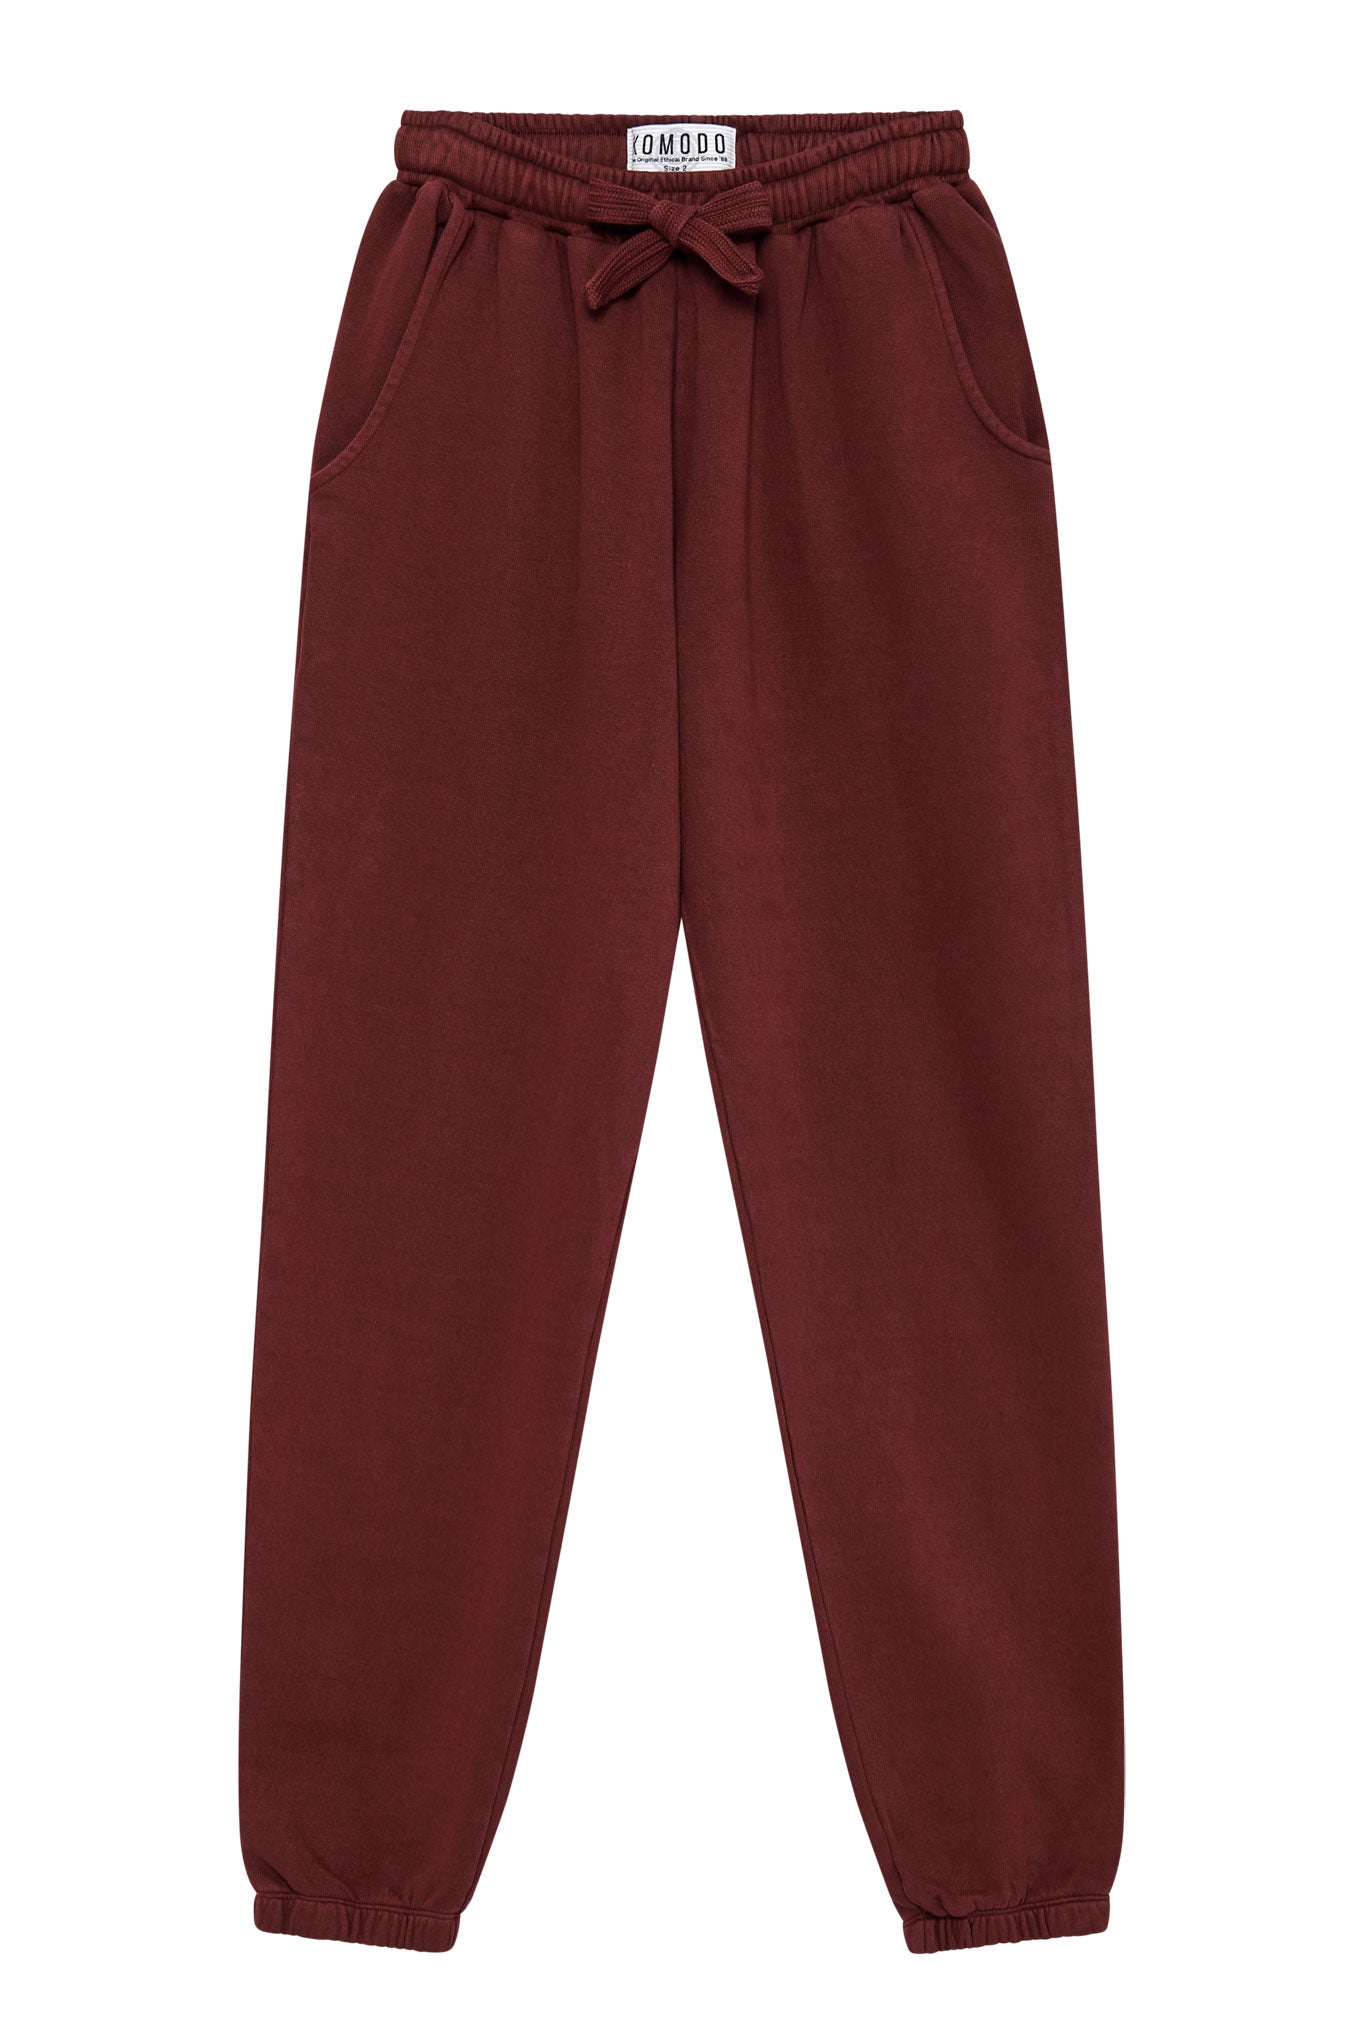 Pantalon de jogging ADAM rouge foncé en coton 100% biologique de Komodo